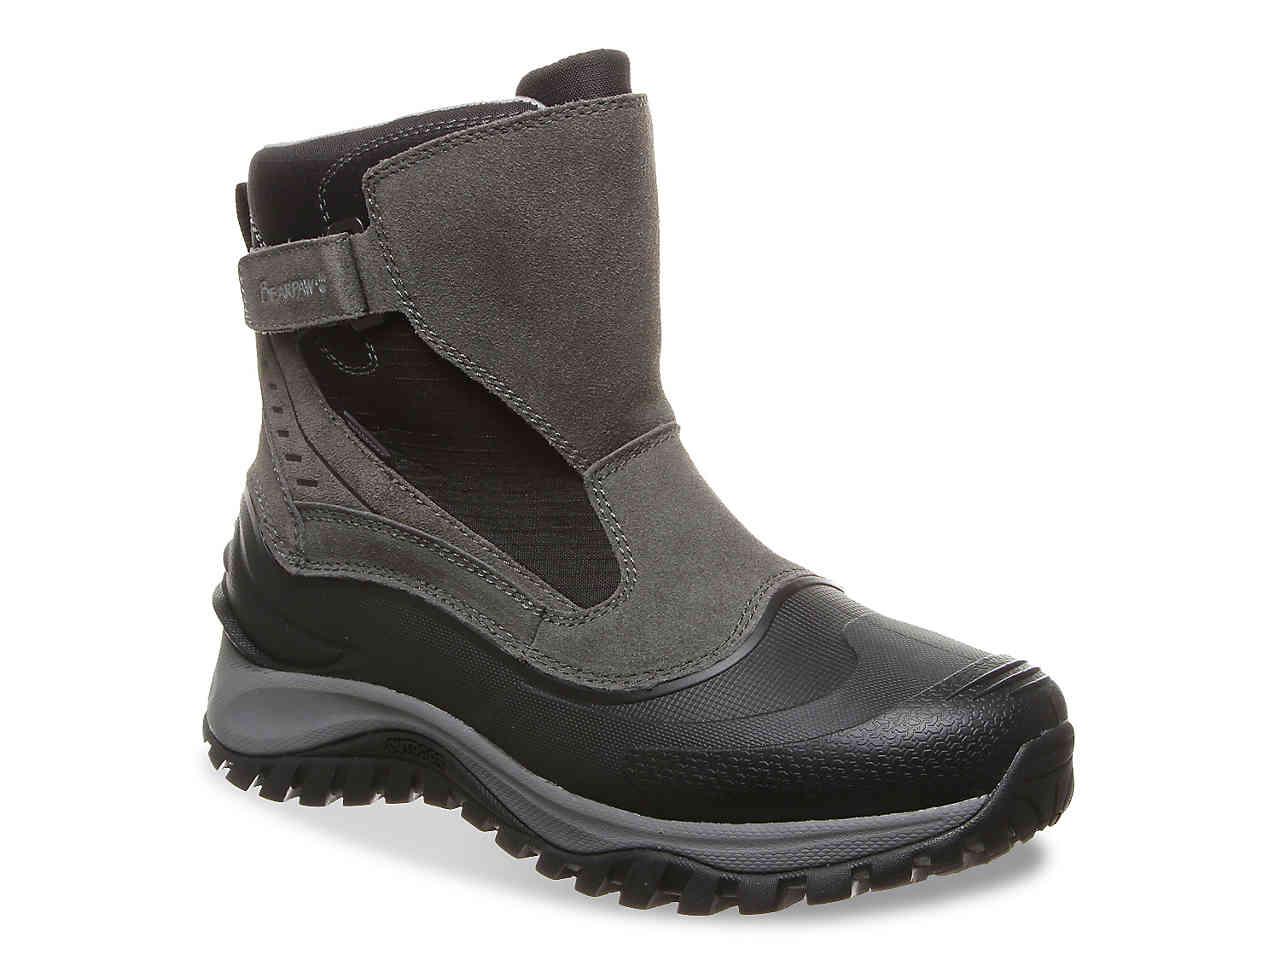 BEARPAW Fleece Overland Snow Boot in Grey/Black (Black) for Men - Lyst